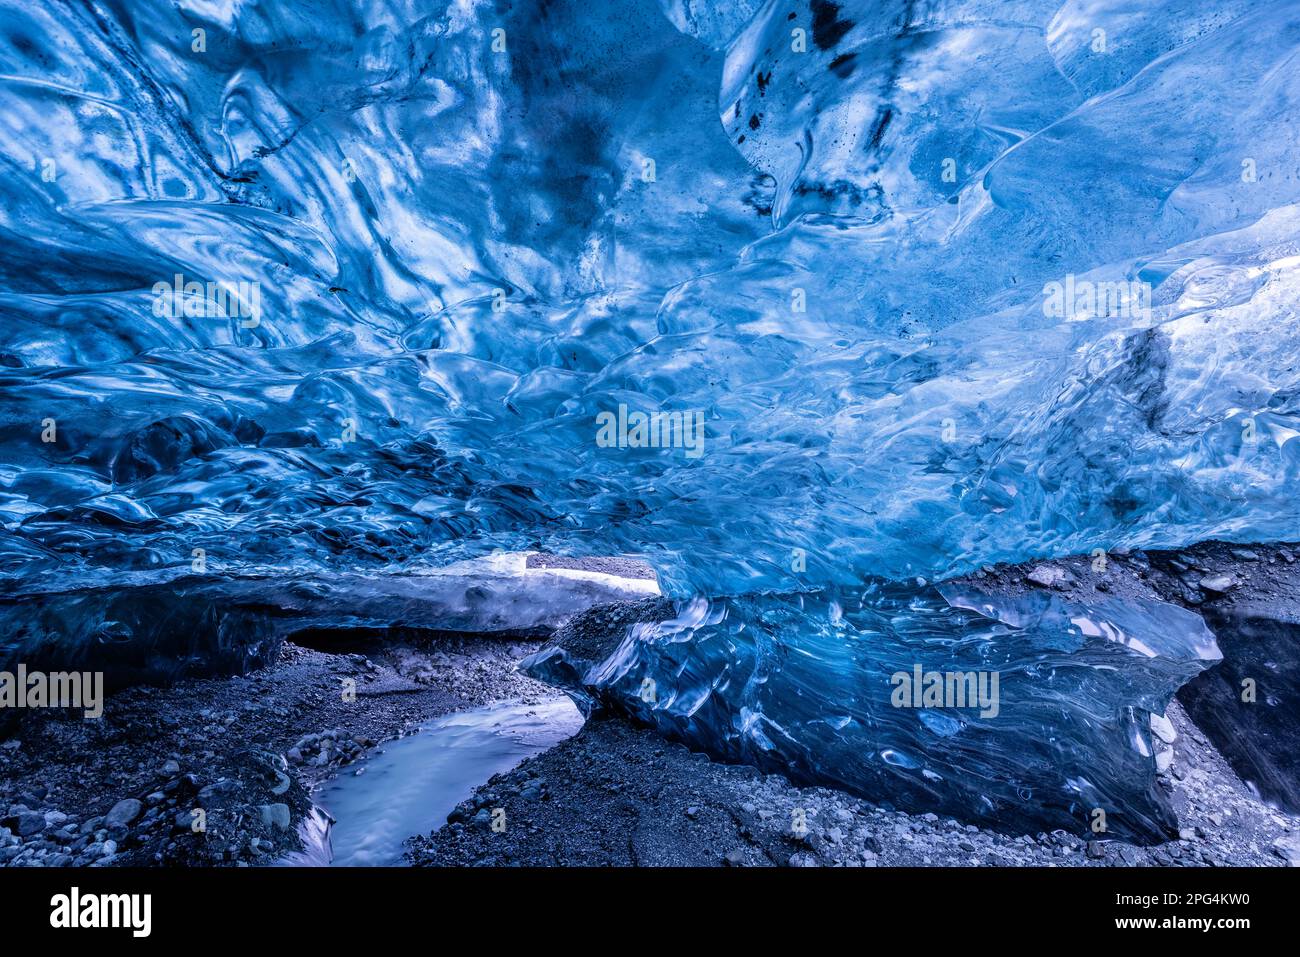 Grotte de glace Sapphire Breiðamerkurjökull du parc national de Vatnajökull, Islande Banque D'Images